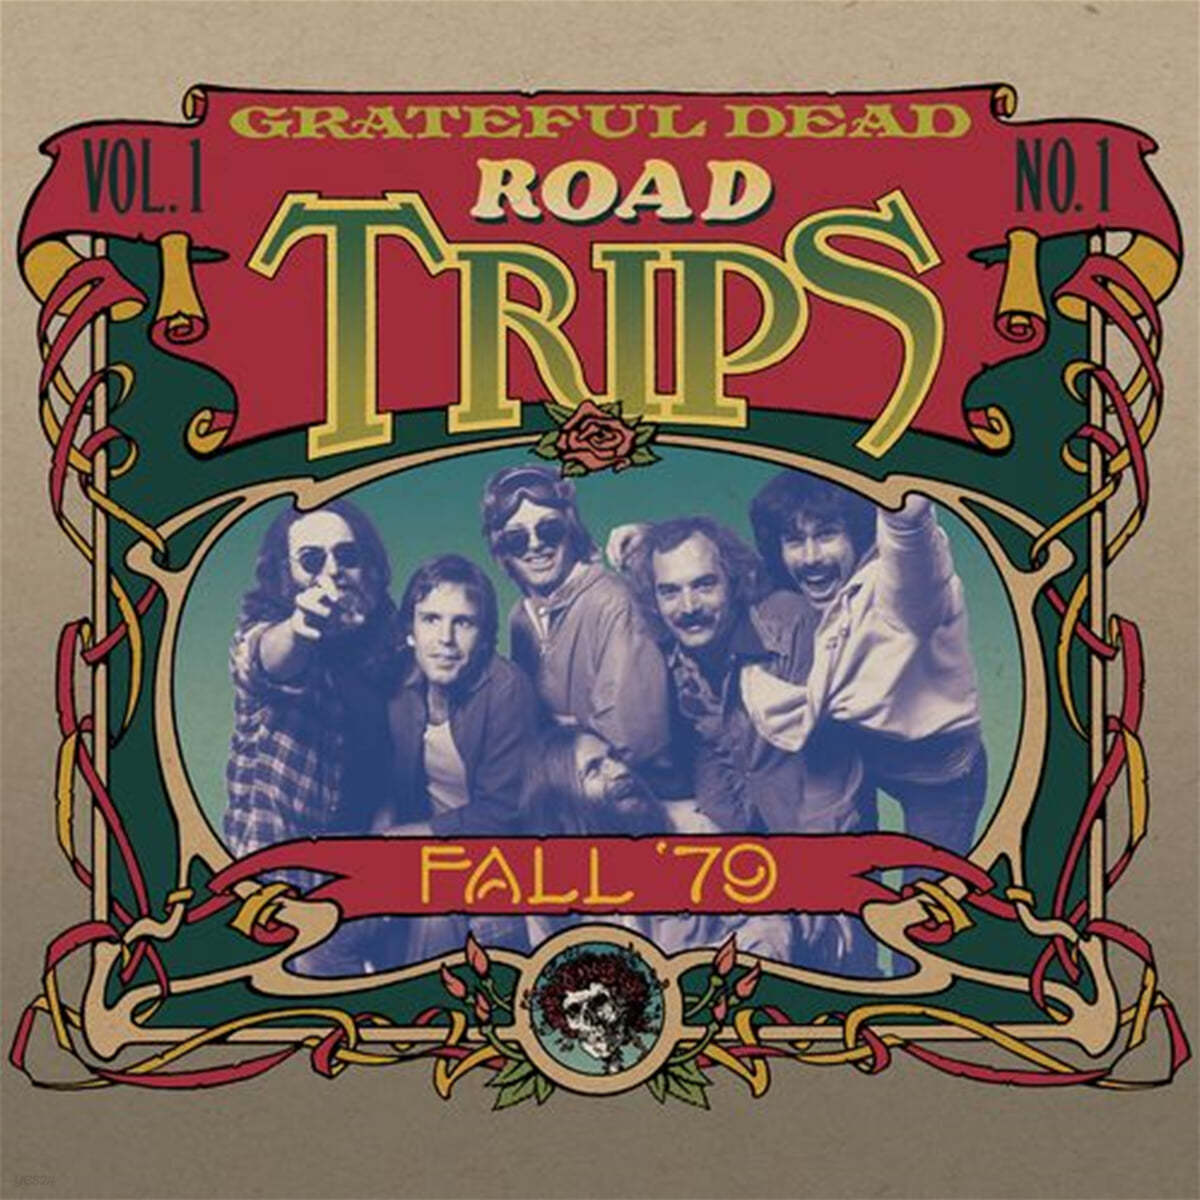 Grateful Dead (그레이트풀 데드) - Road Trips Vol. 1 No. 1 - Fall '79